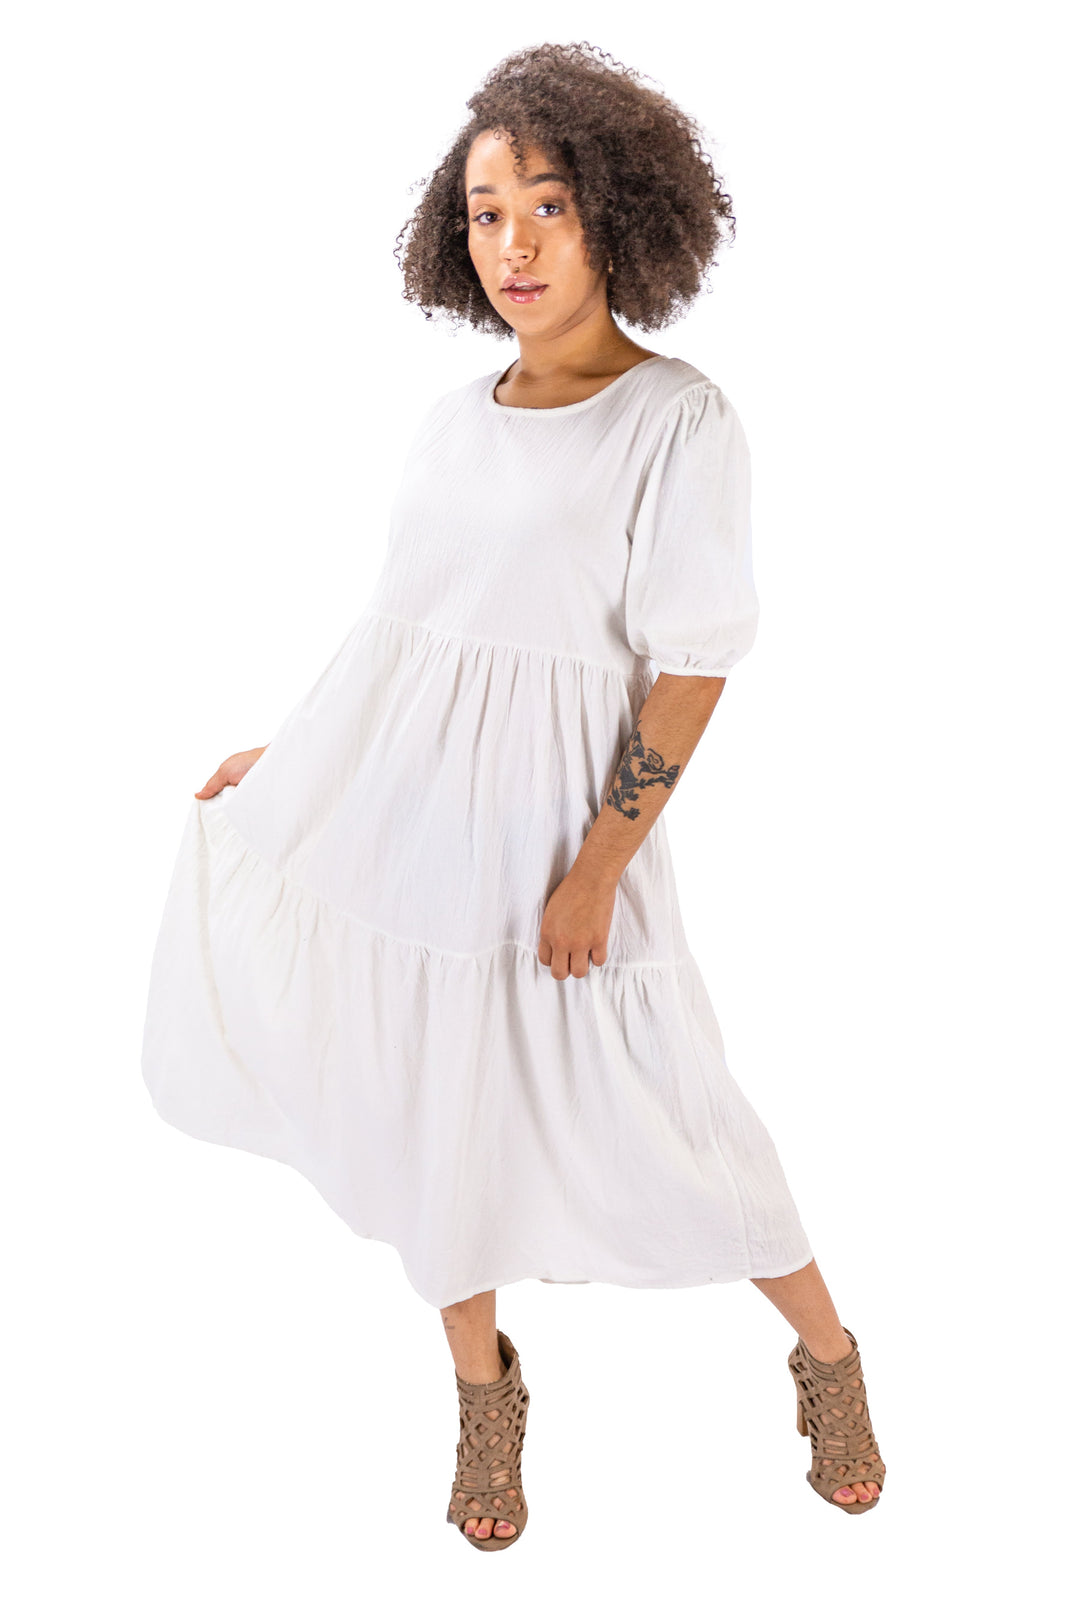 Fabonics Elegant Simplicity White Midi Dress with Tiered Design for Versatile Style